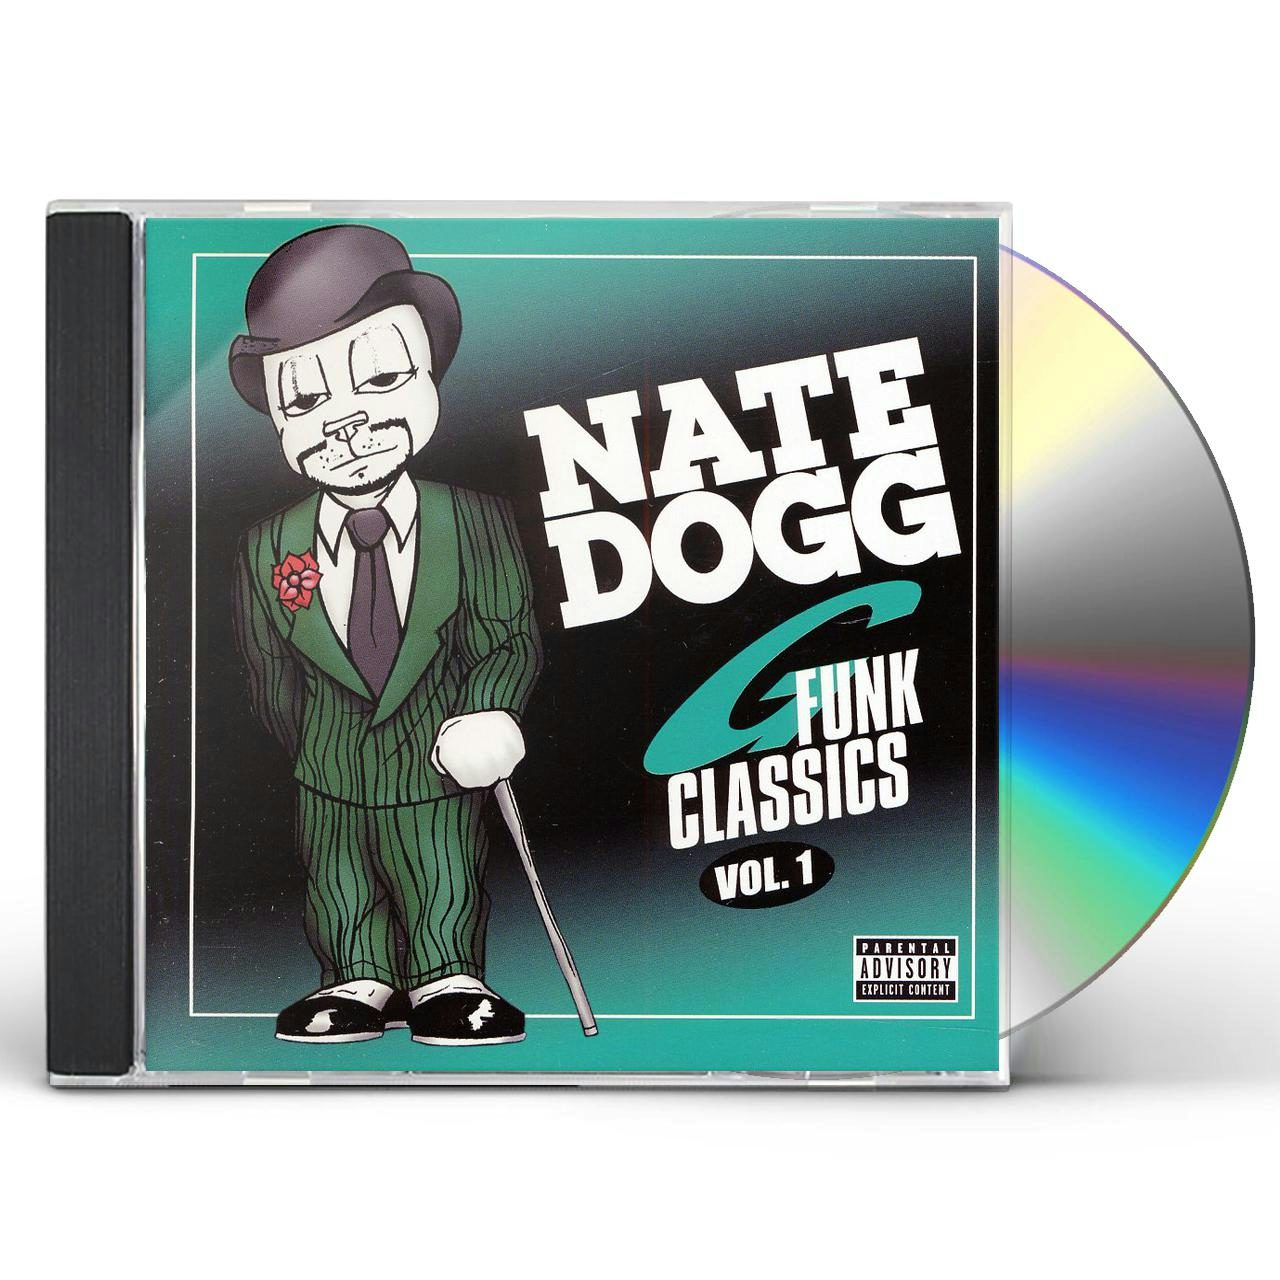 Nate Dogg G-FUNK MIX CD